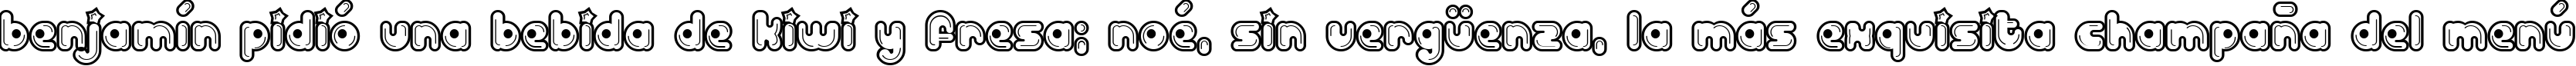 Пример написания шрифтом Billo Dream текста на испанском